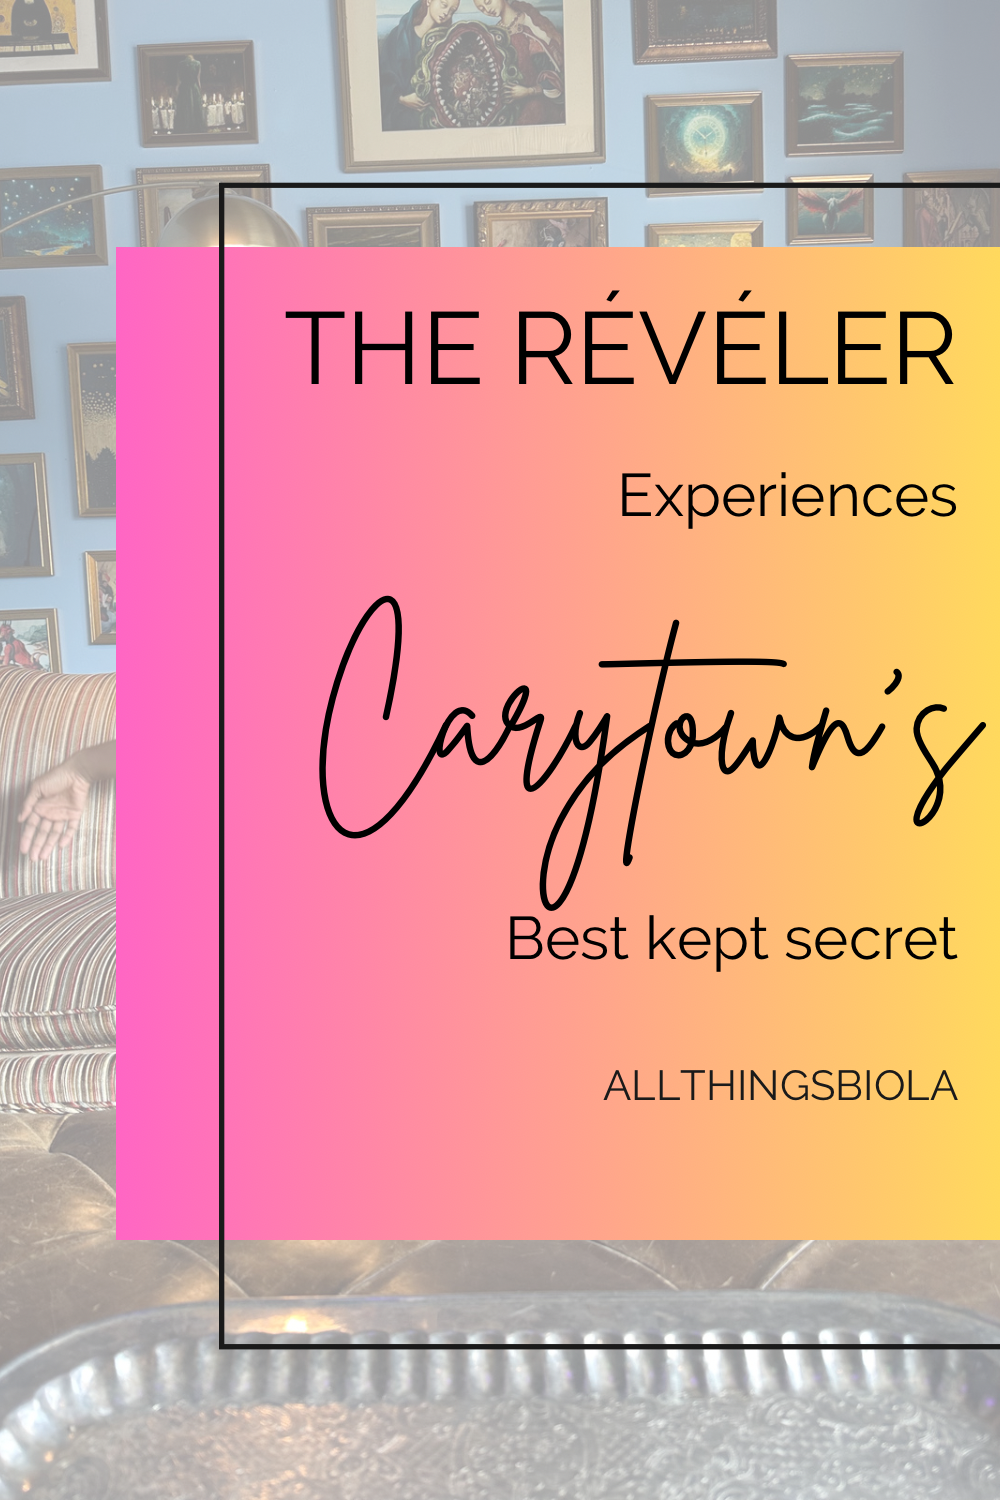  The Révéler – Carytown’s Best-Kept Secret